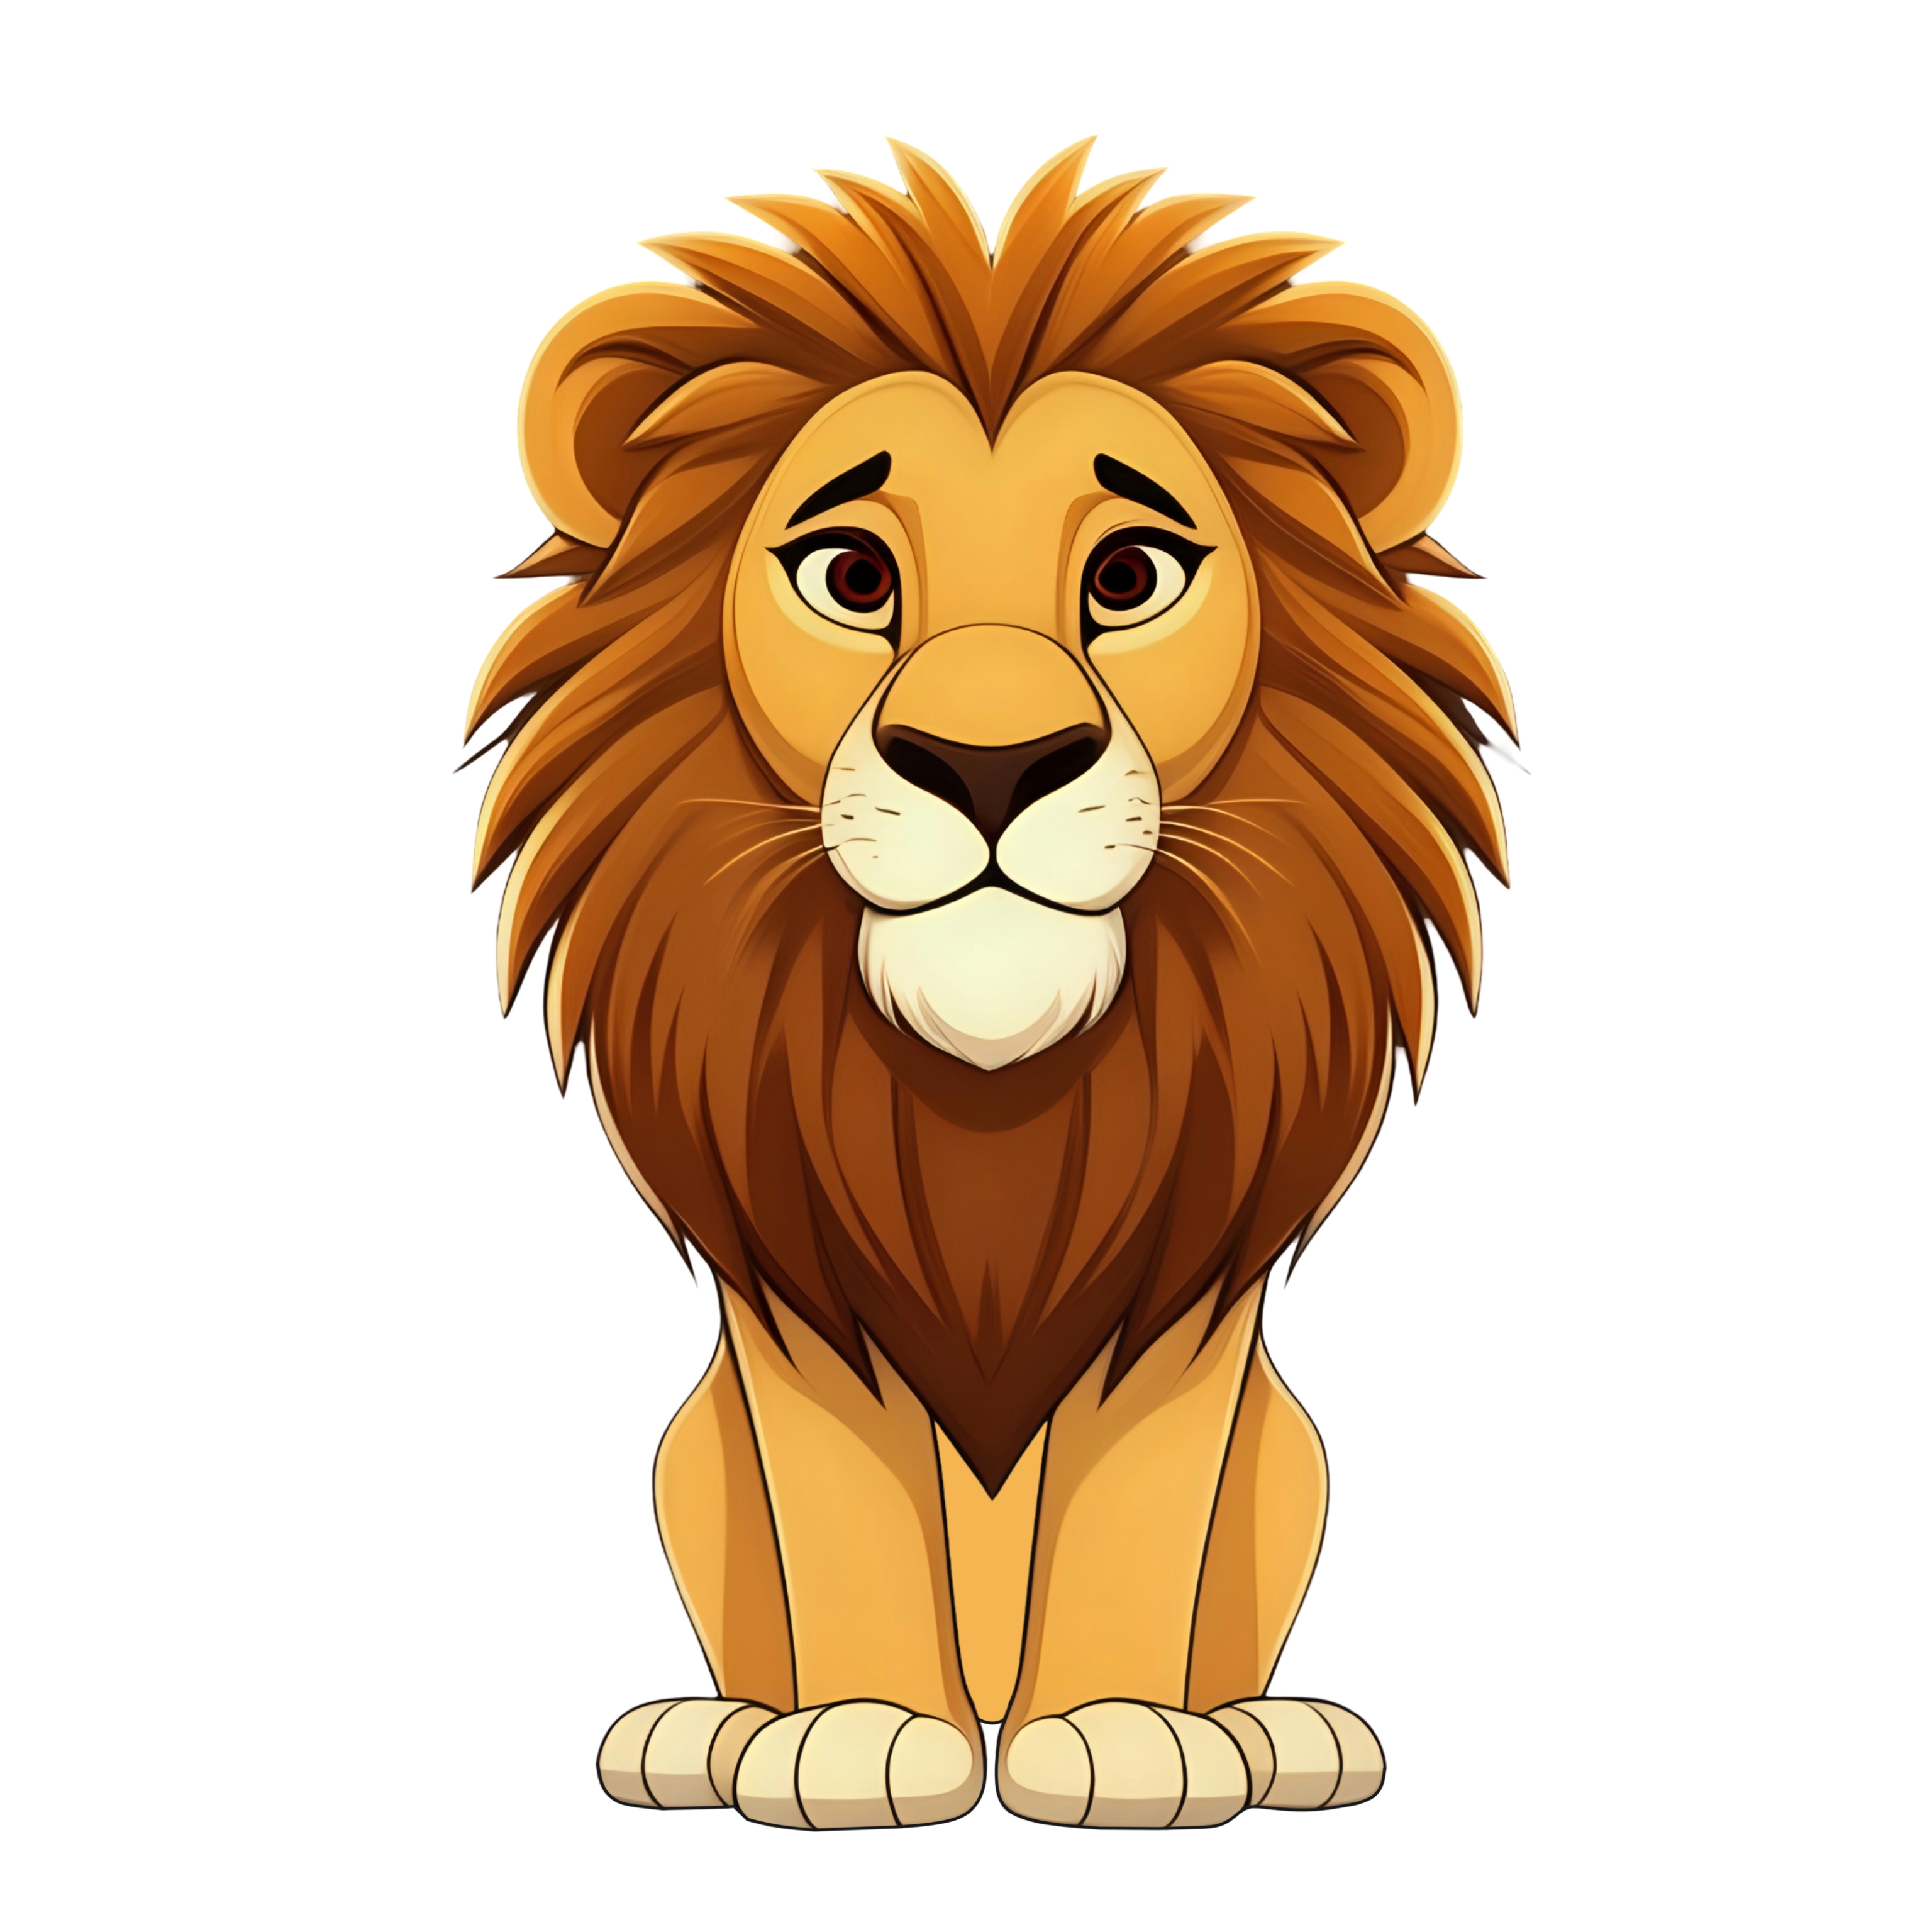 Lion cartoon character